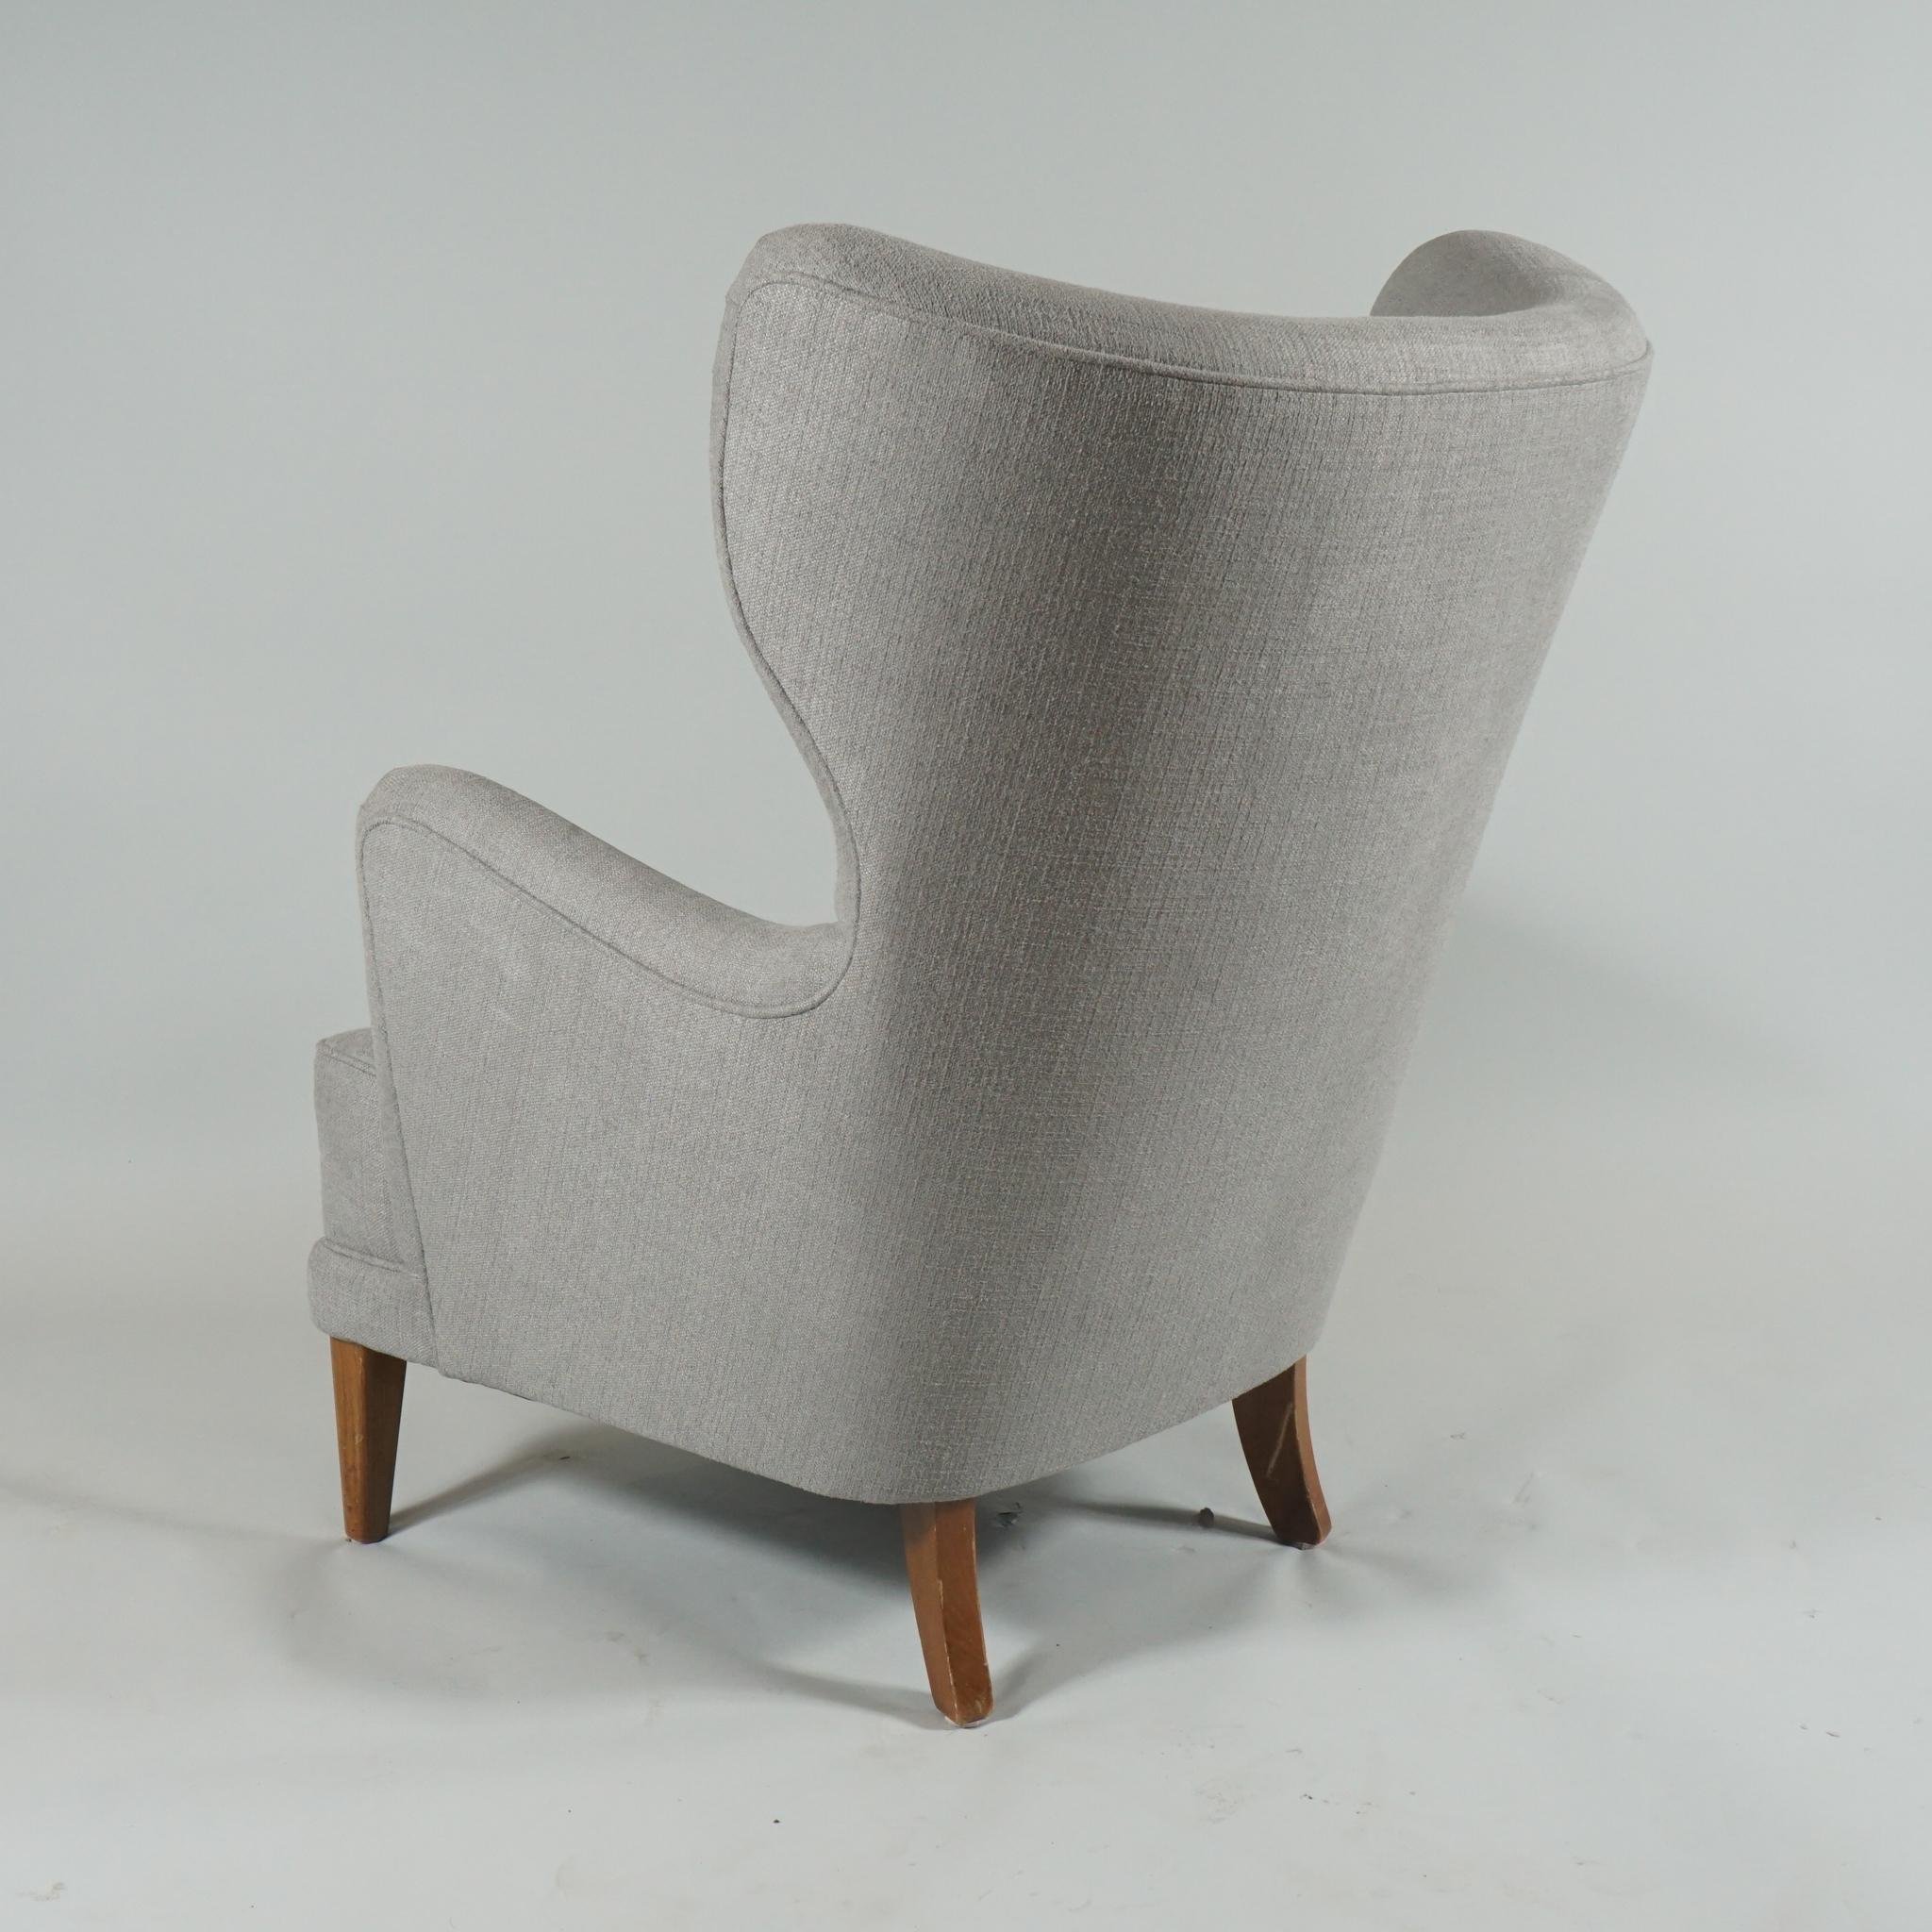 Carved Danish Modern Lounge Chair